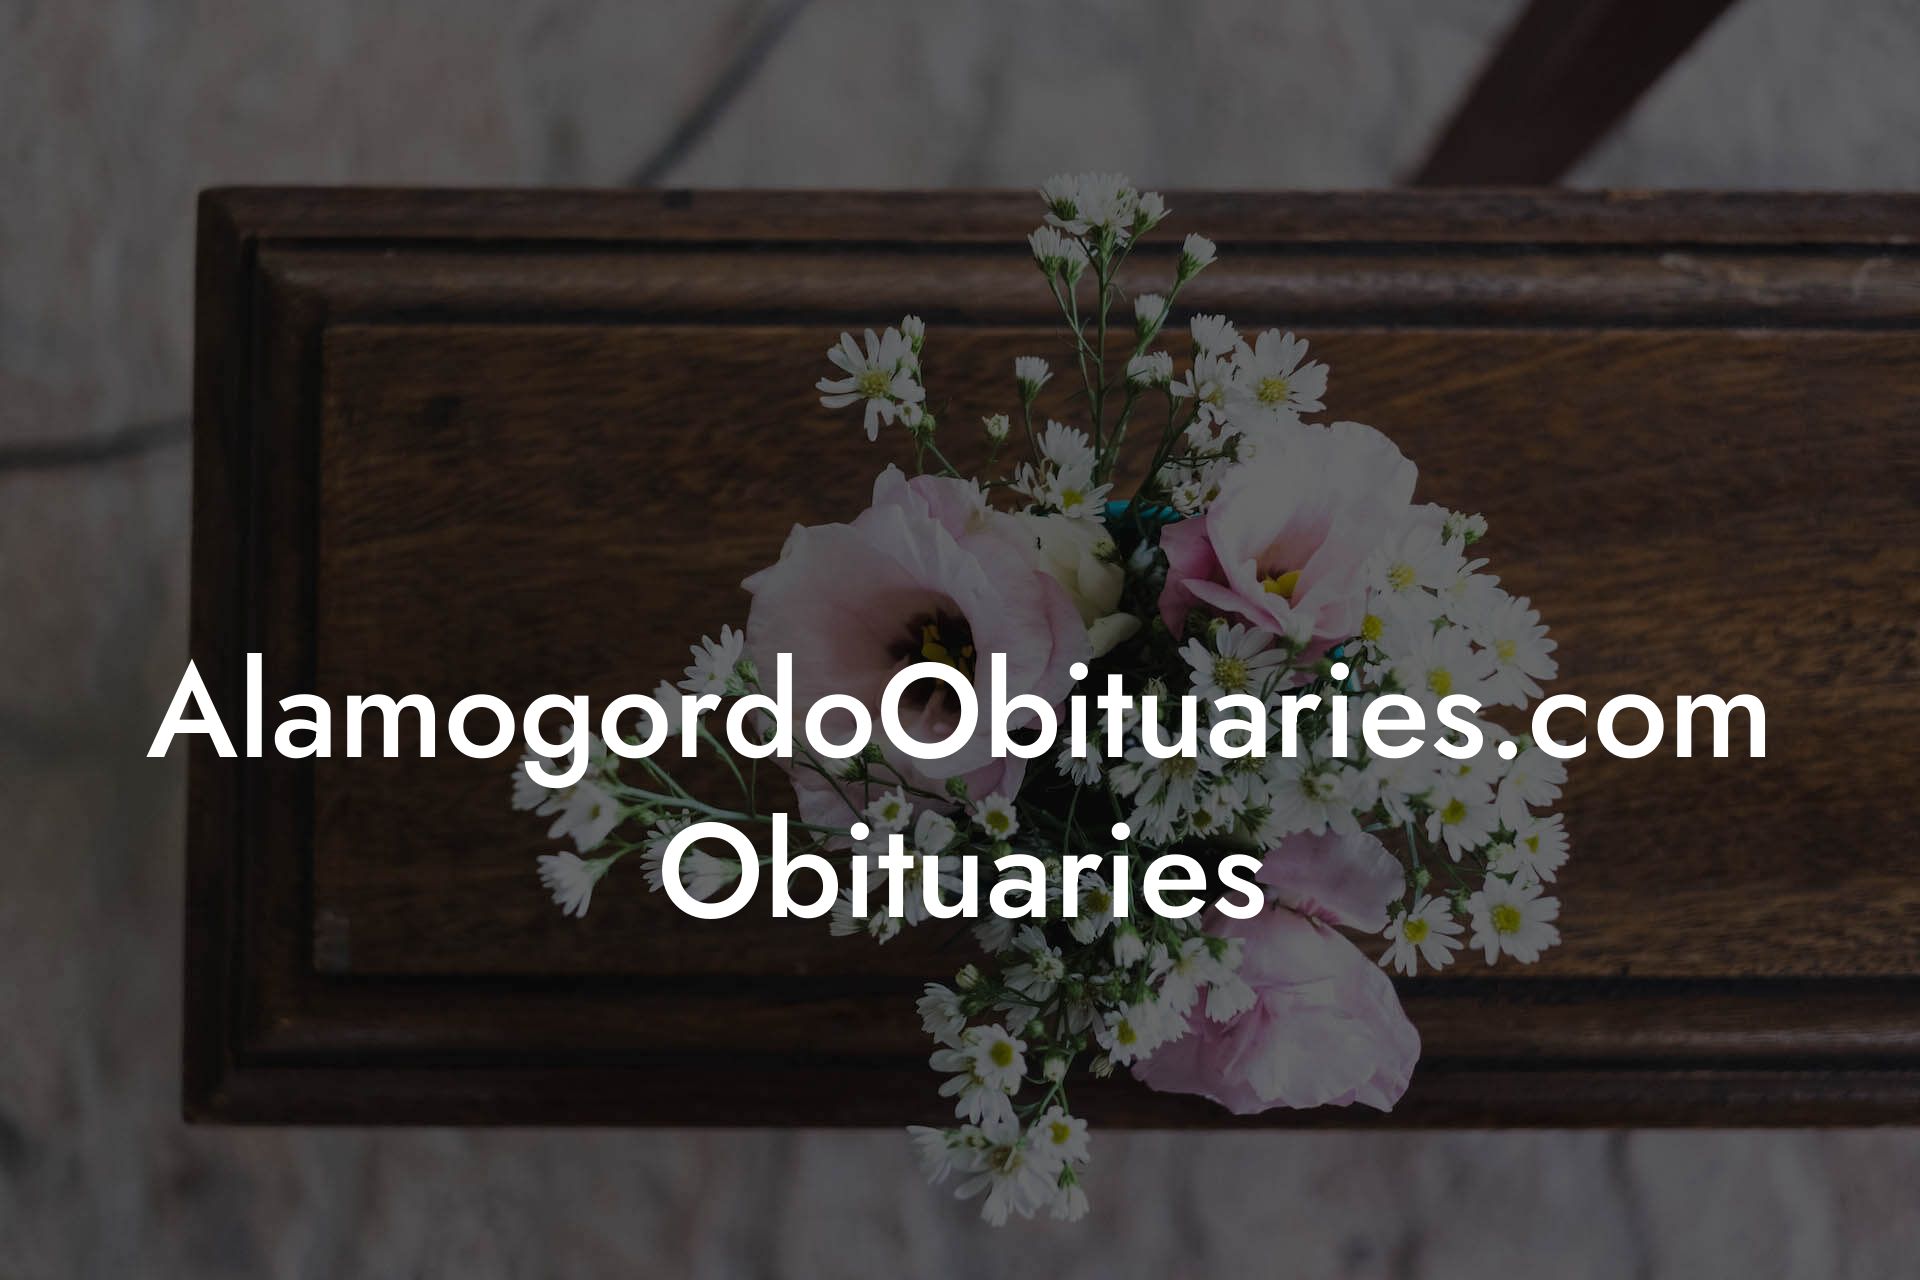 AlamogordoObituaries.com Obituaries